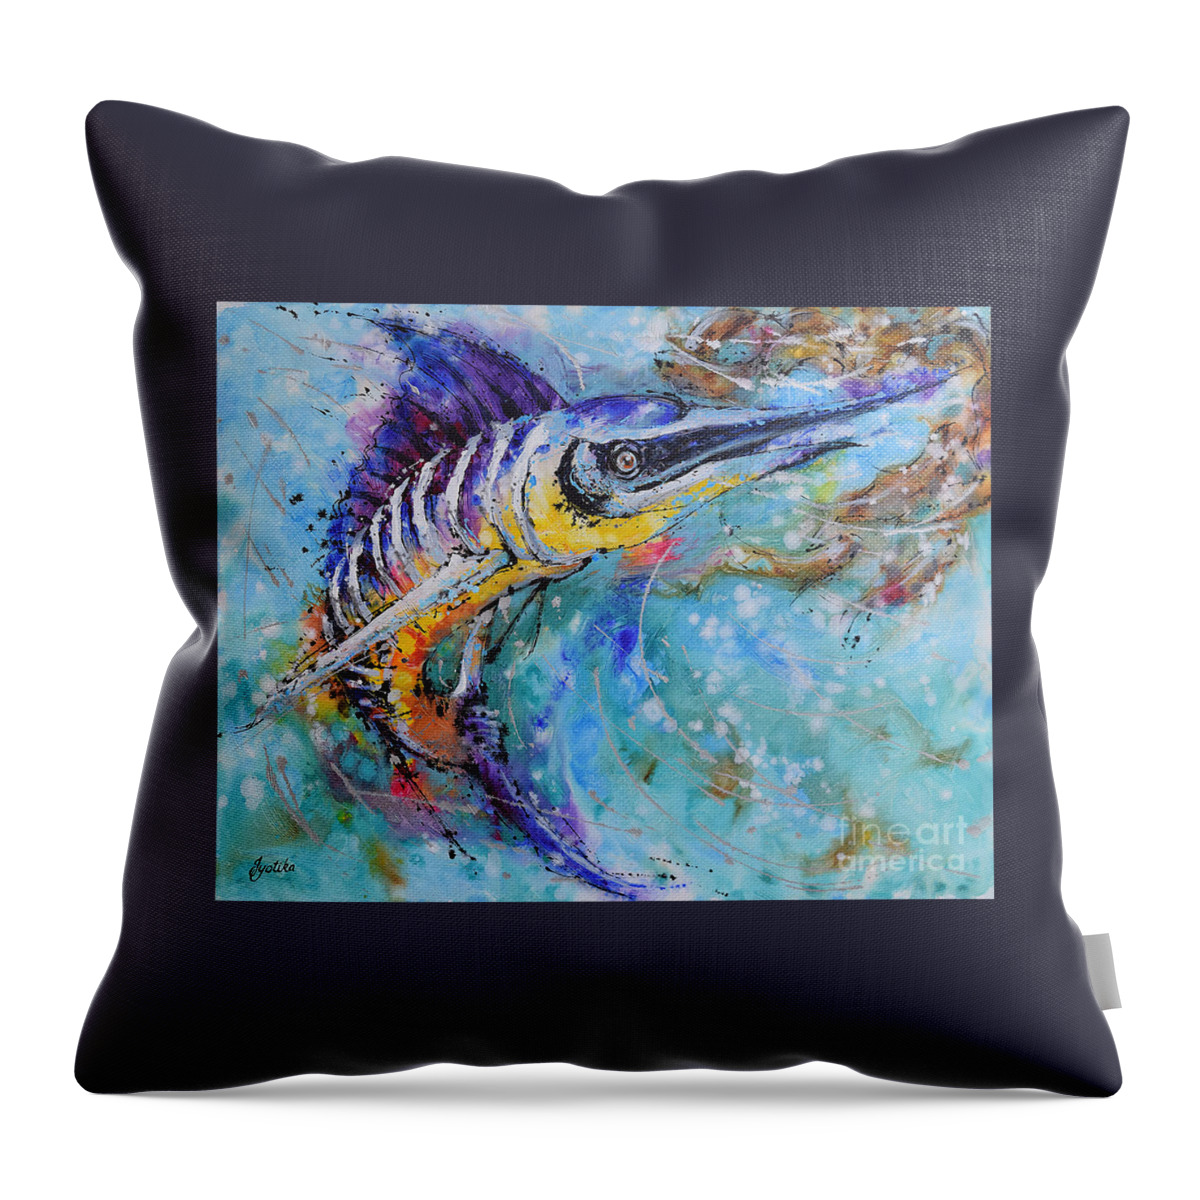 Blue Marlin's Twist Throw Pillow featuring the painting Blue Marlin's Twist by Jyotika Shroff